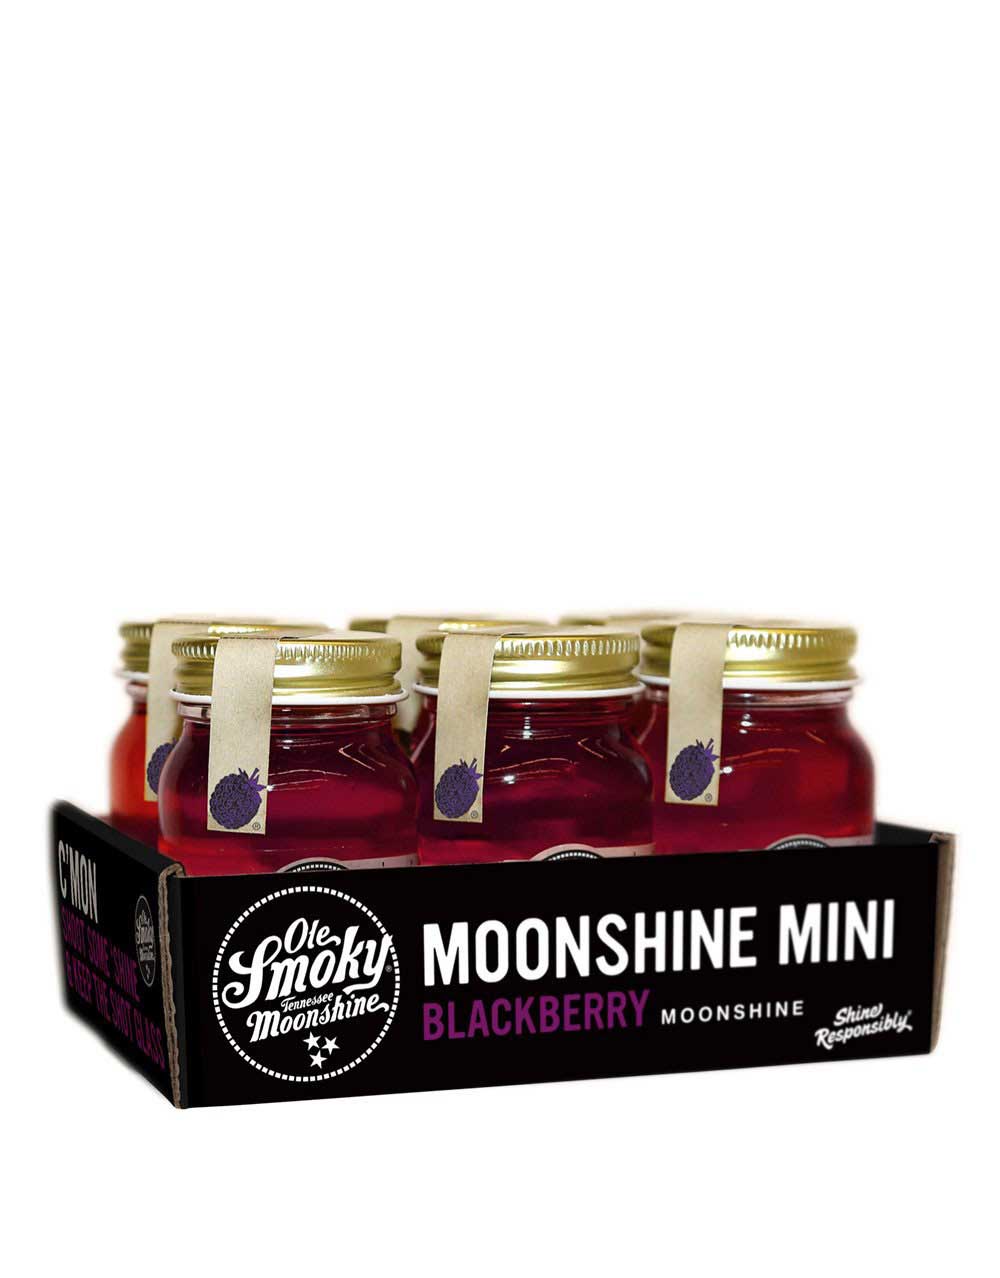 Ole Smoky Blackberry Moonshine Minis